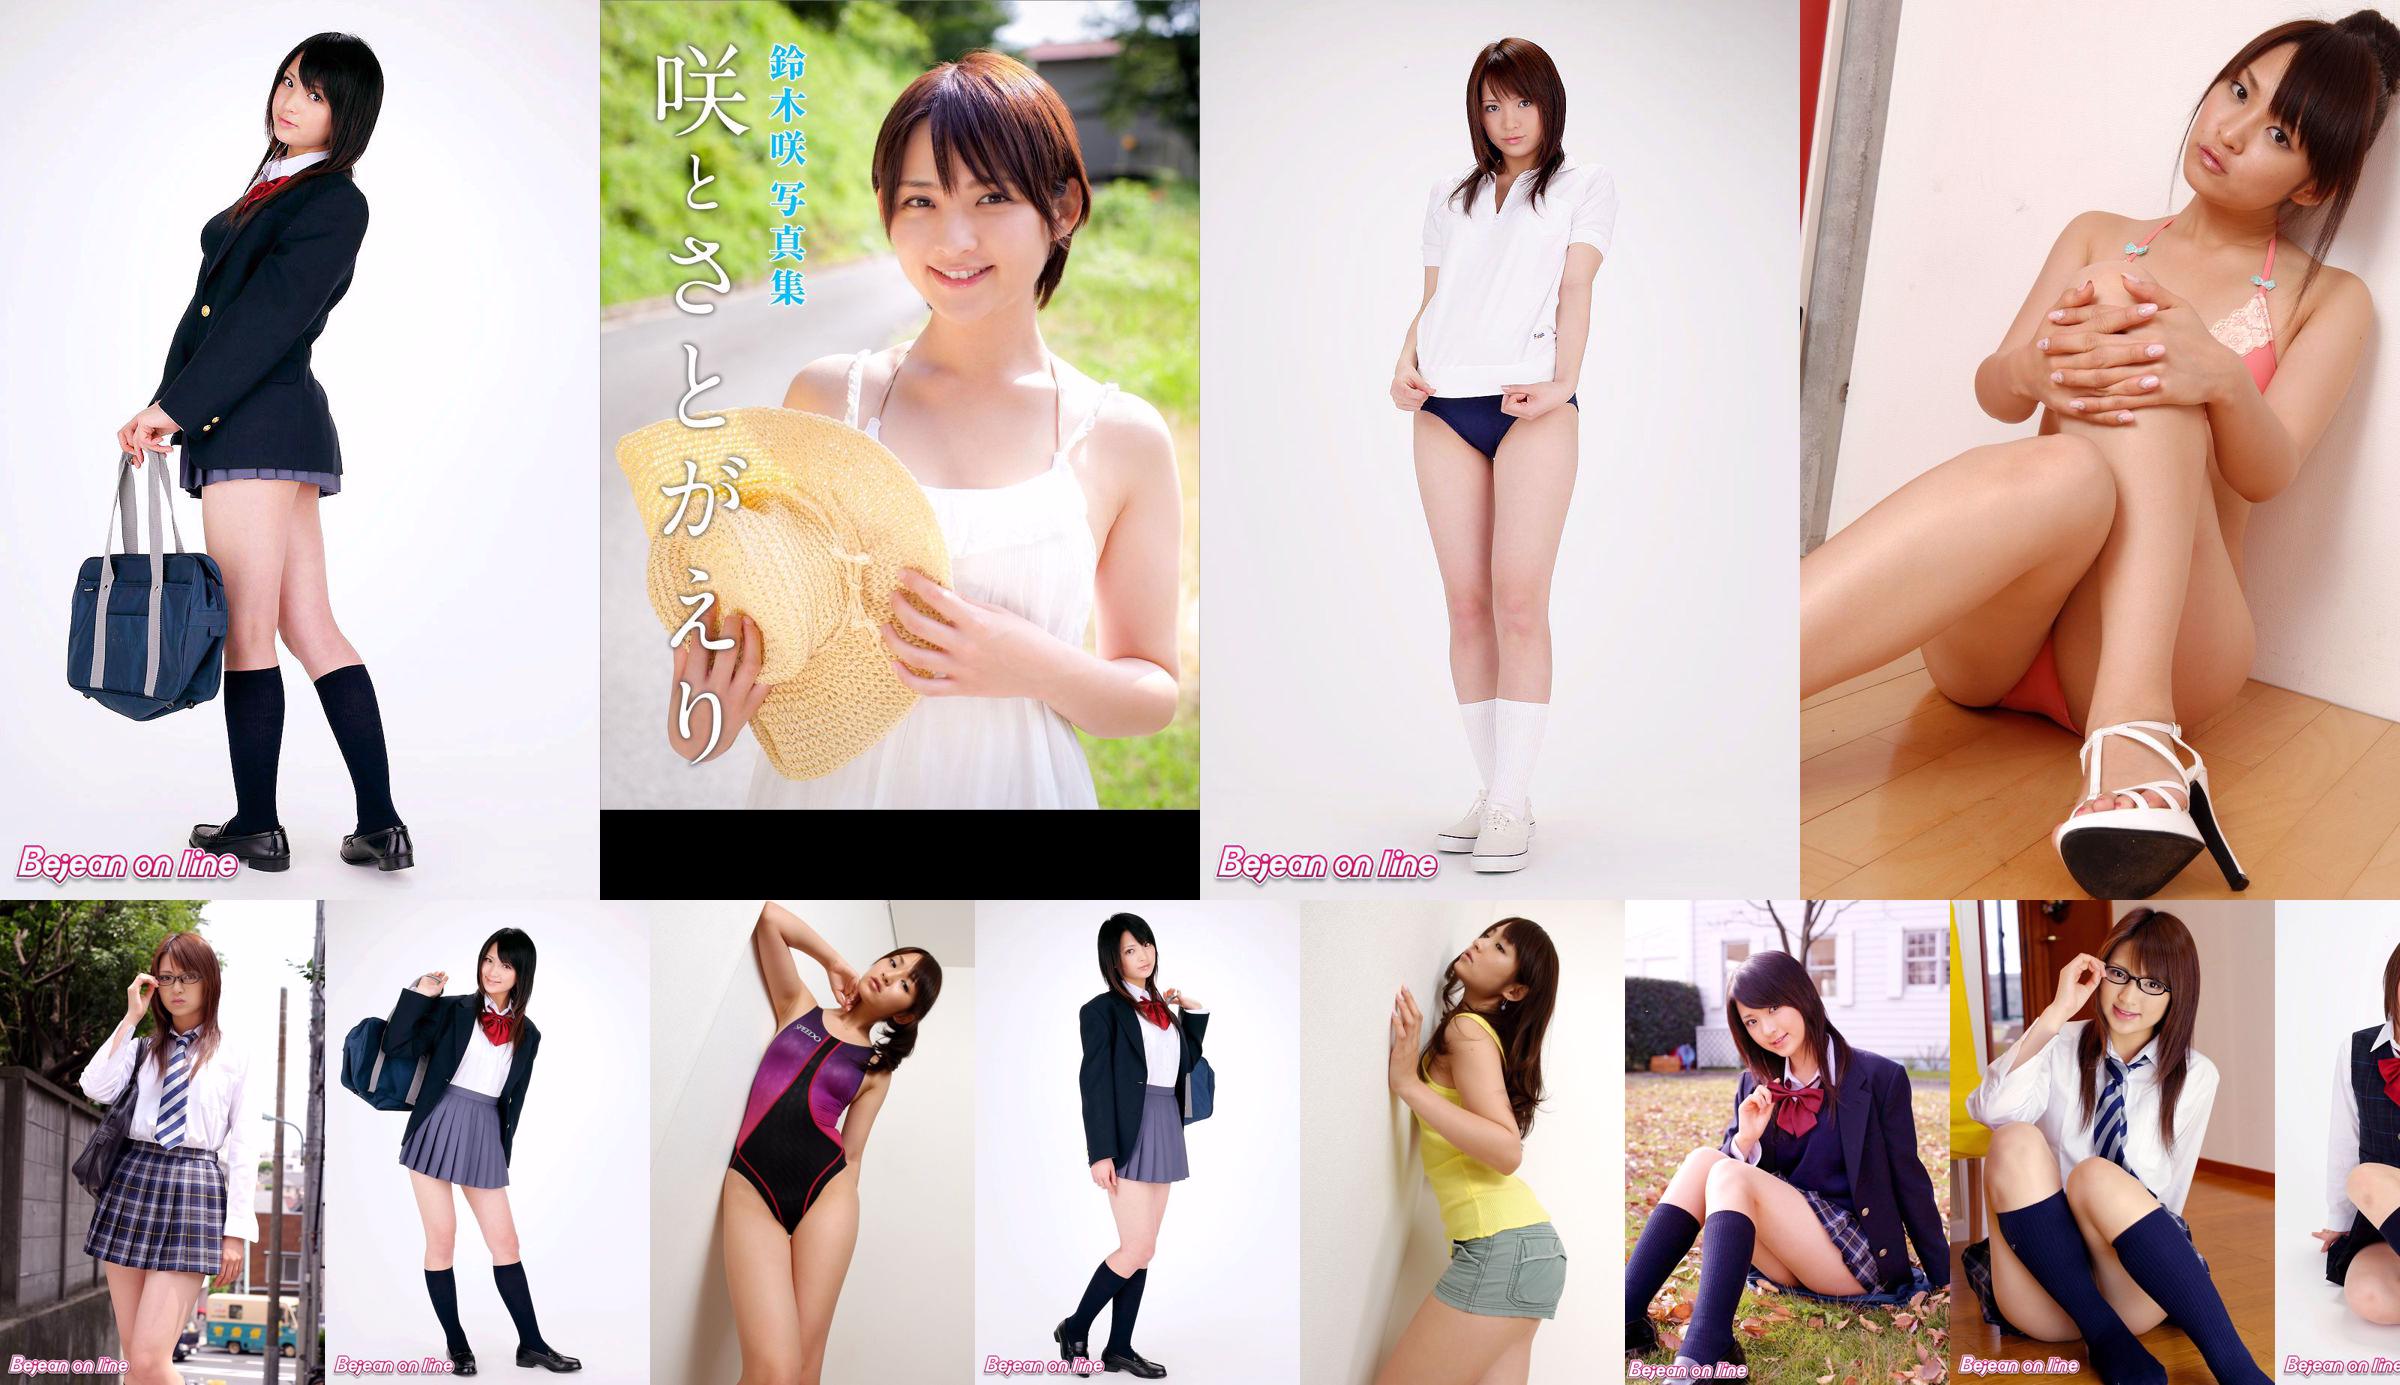 Cover Girl カバーガール Saki Suzuki Suzuki Saki [Bejean On Line] No.09a609 Page 2